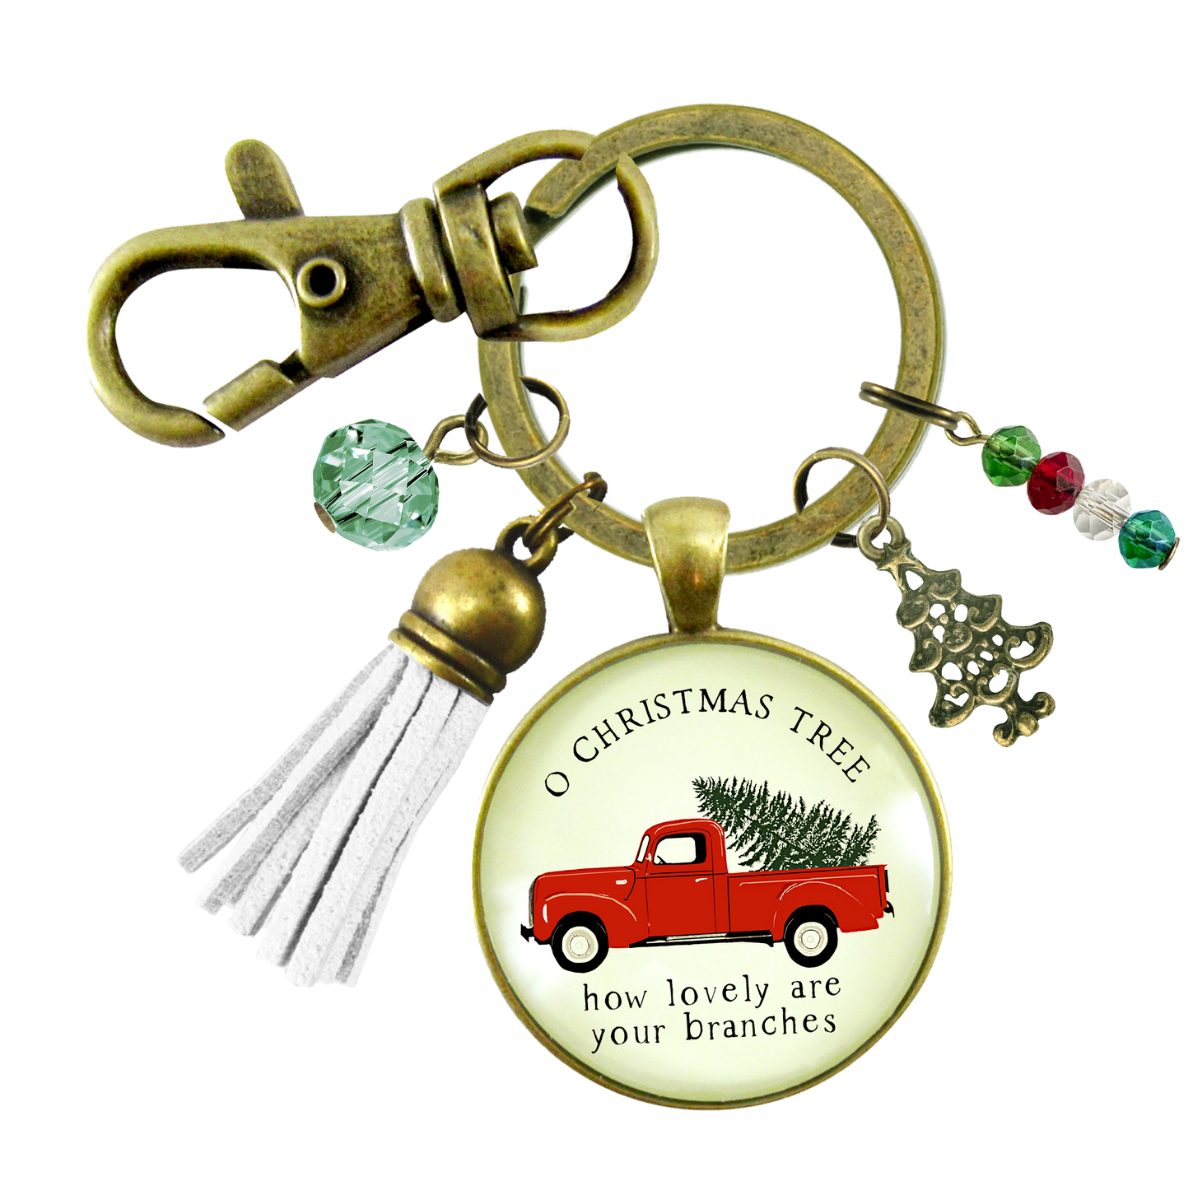 Red Truck Vintage Theme Christmas Keychain Holiday Tree Charm Jewelry O Christmas Tree Handmade Gift Tassel Key Ring  Keychain - Women - Gutsy Goodness Handmade Jewelry